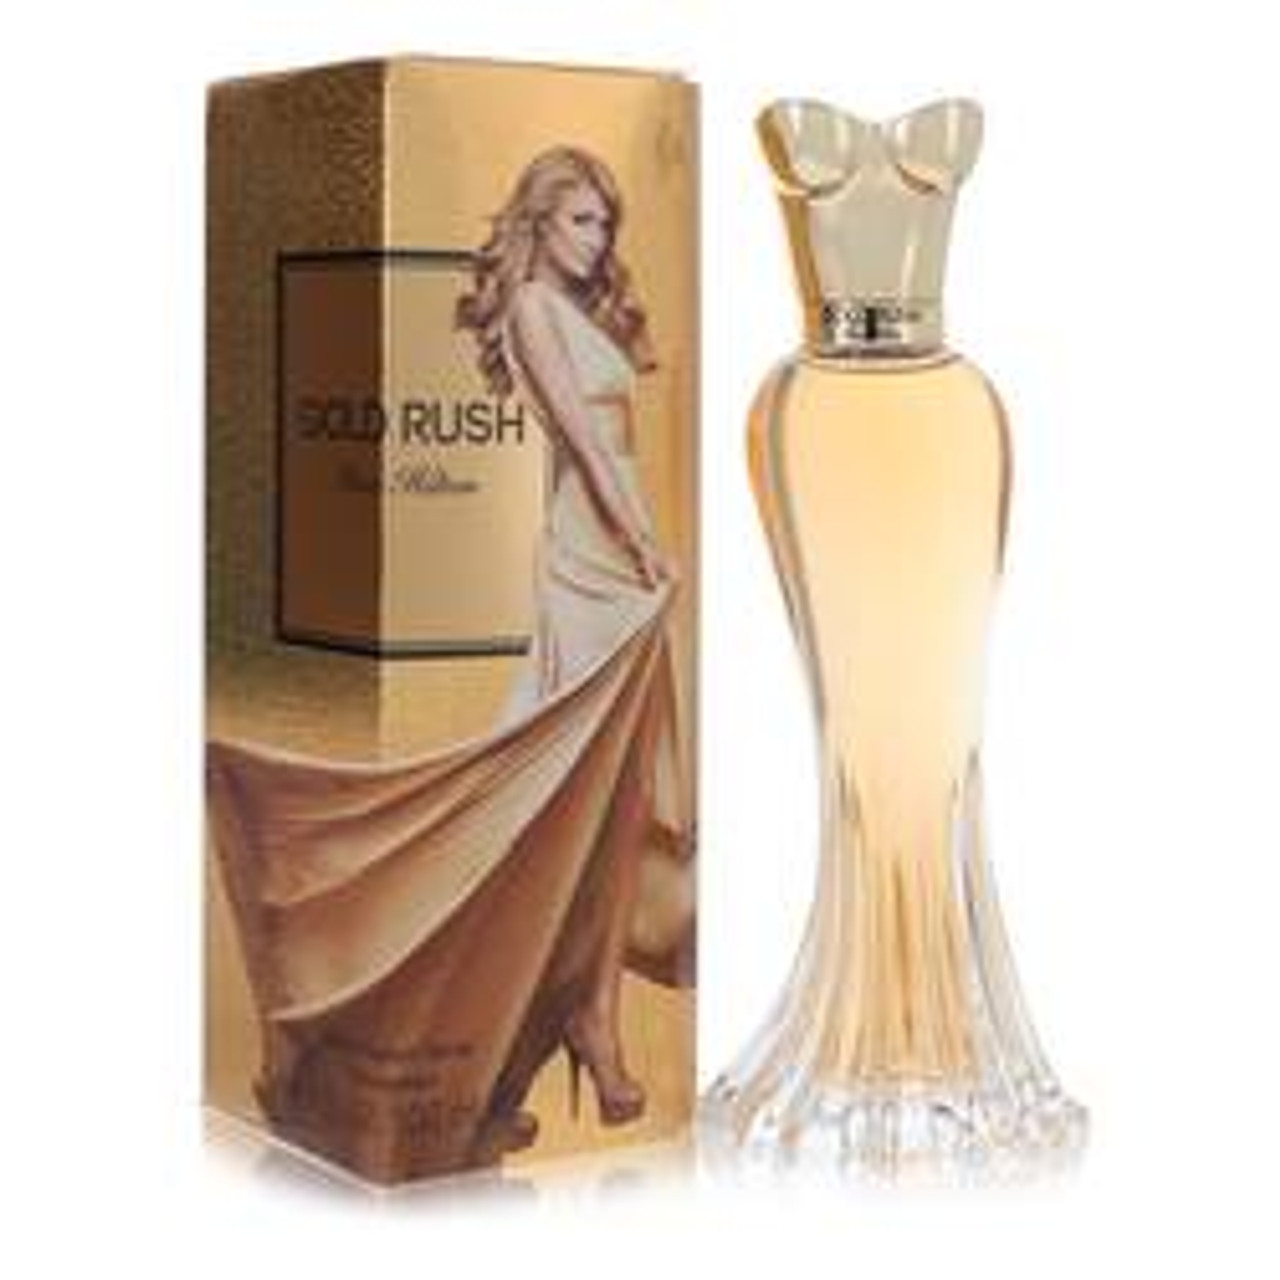 Gold Rush Perfume By Paris Hilton Eau De Parfum Spray 3.4 oz for Women - [From 79.50 - Choose pk Qty ] - *Ships from Miami